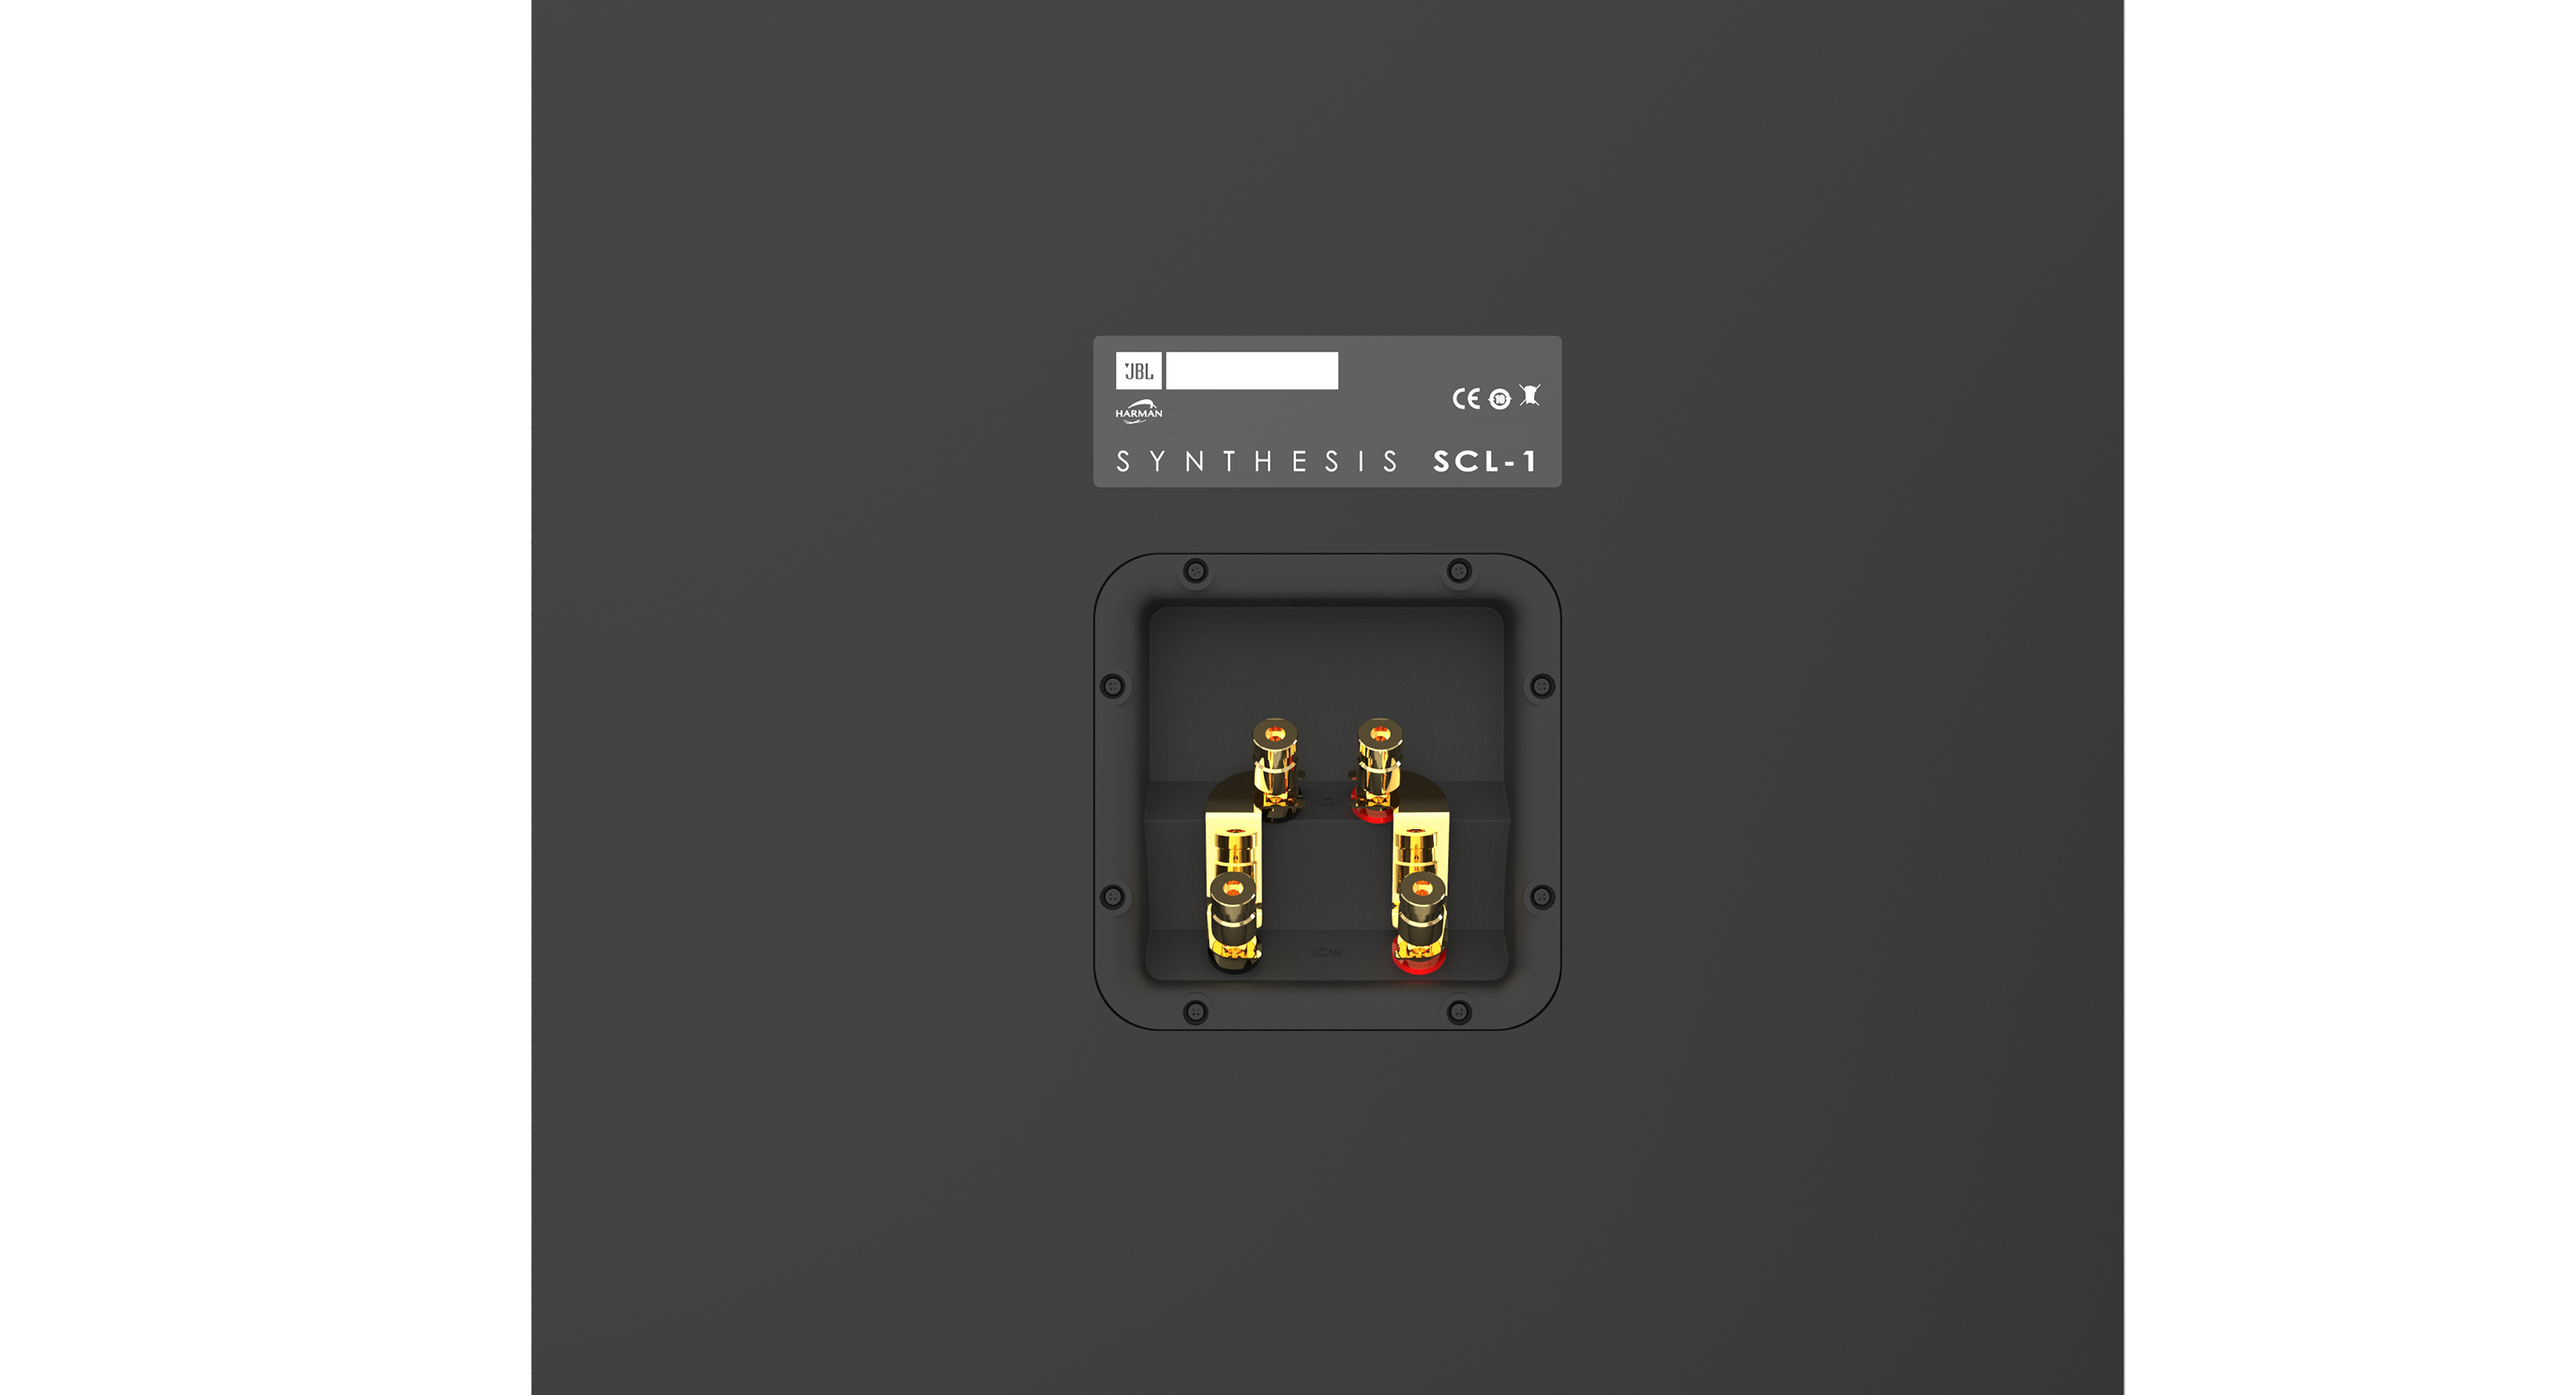 Dual Gold-plated Binding Post Input Terminals